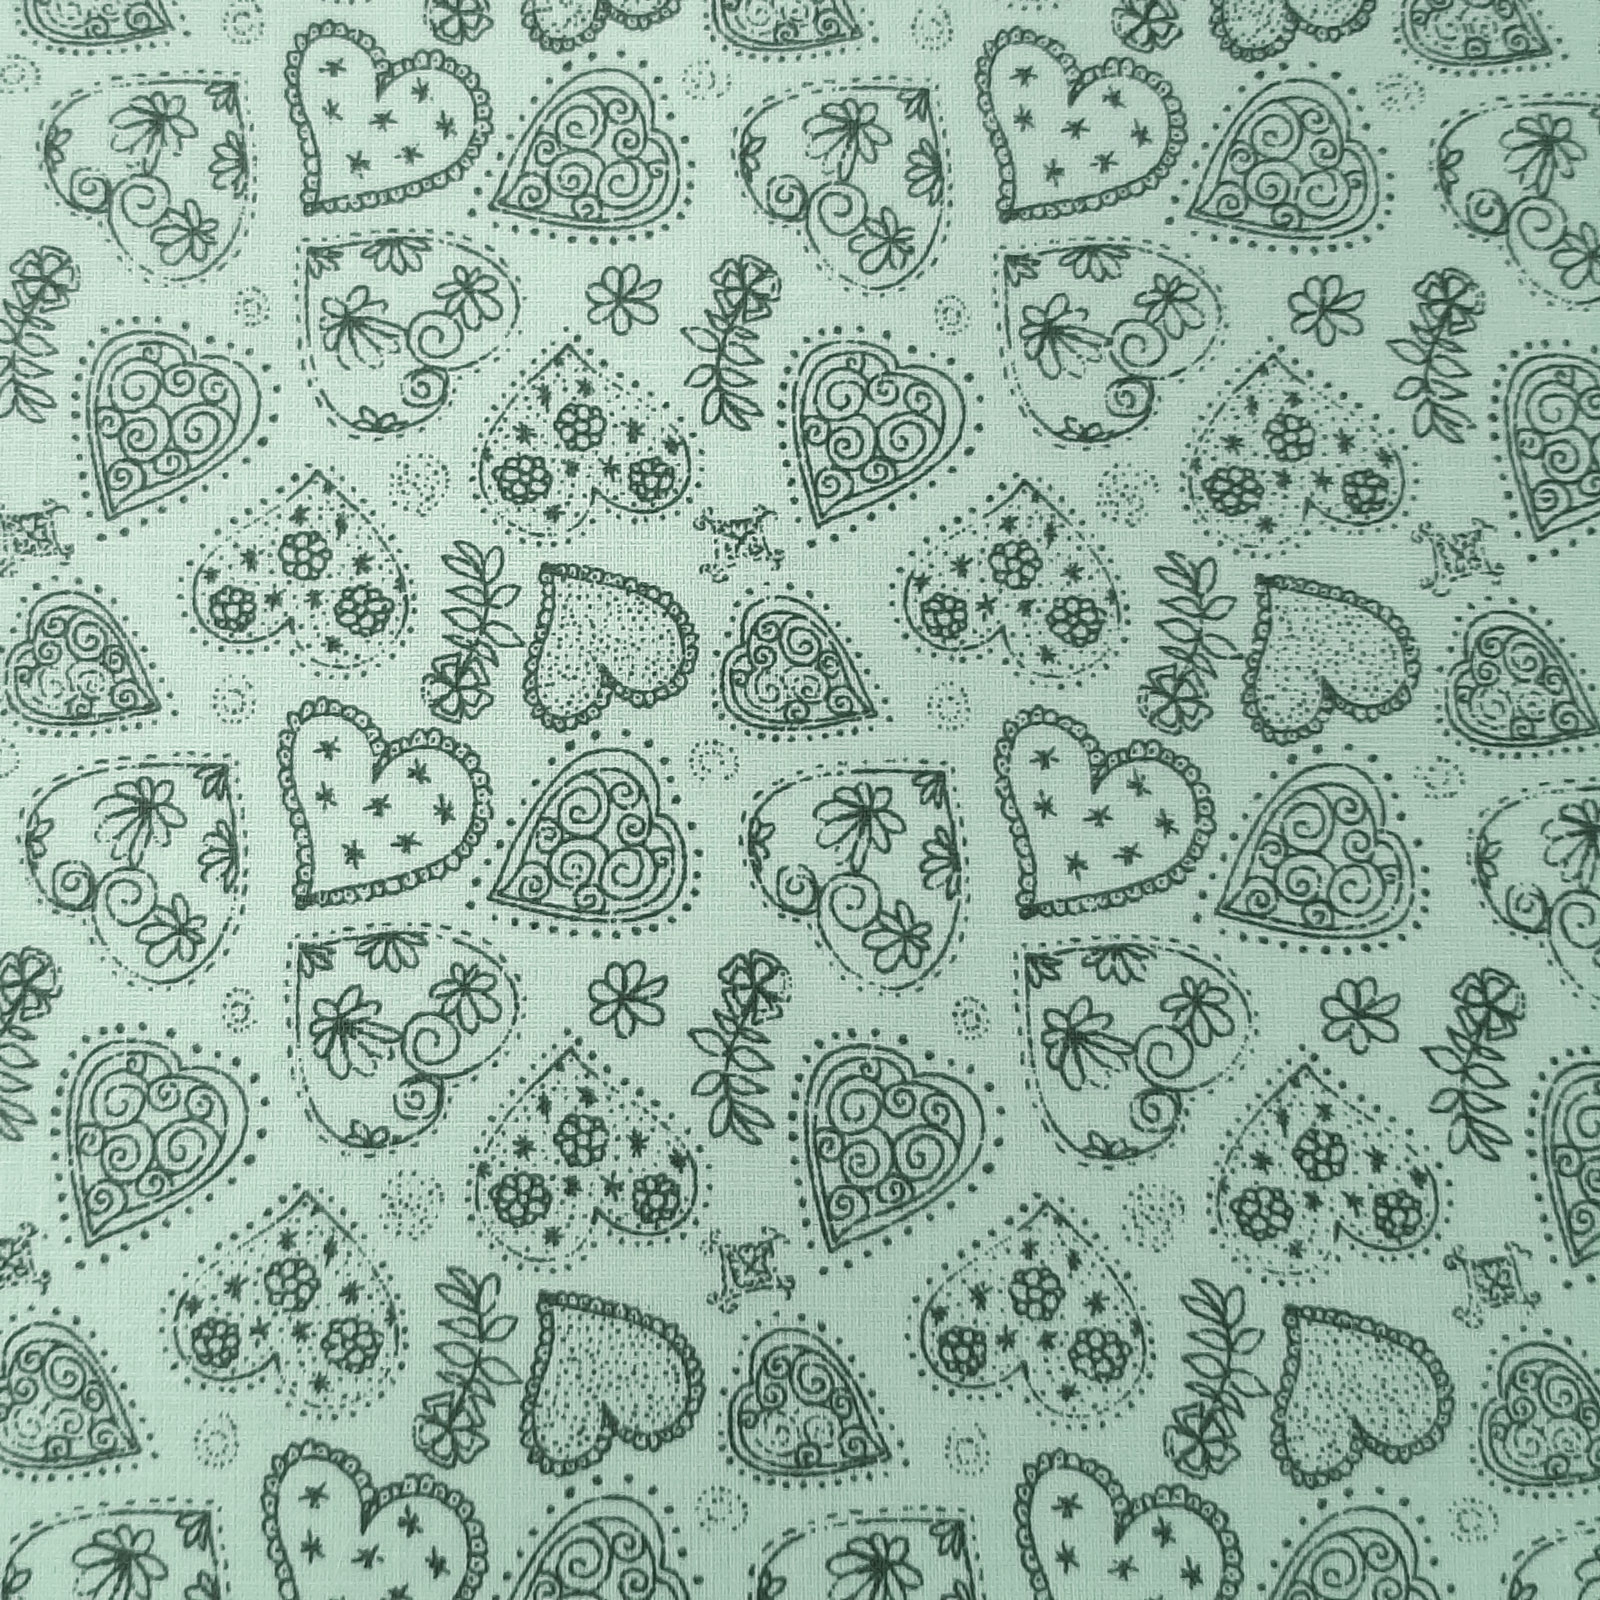 Lara with heart design - Öko Tex® cotton fabric